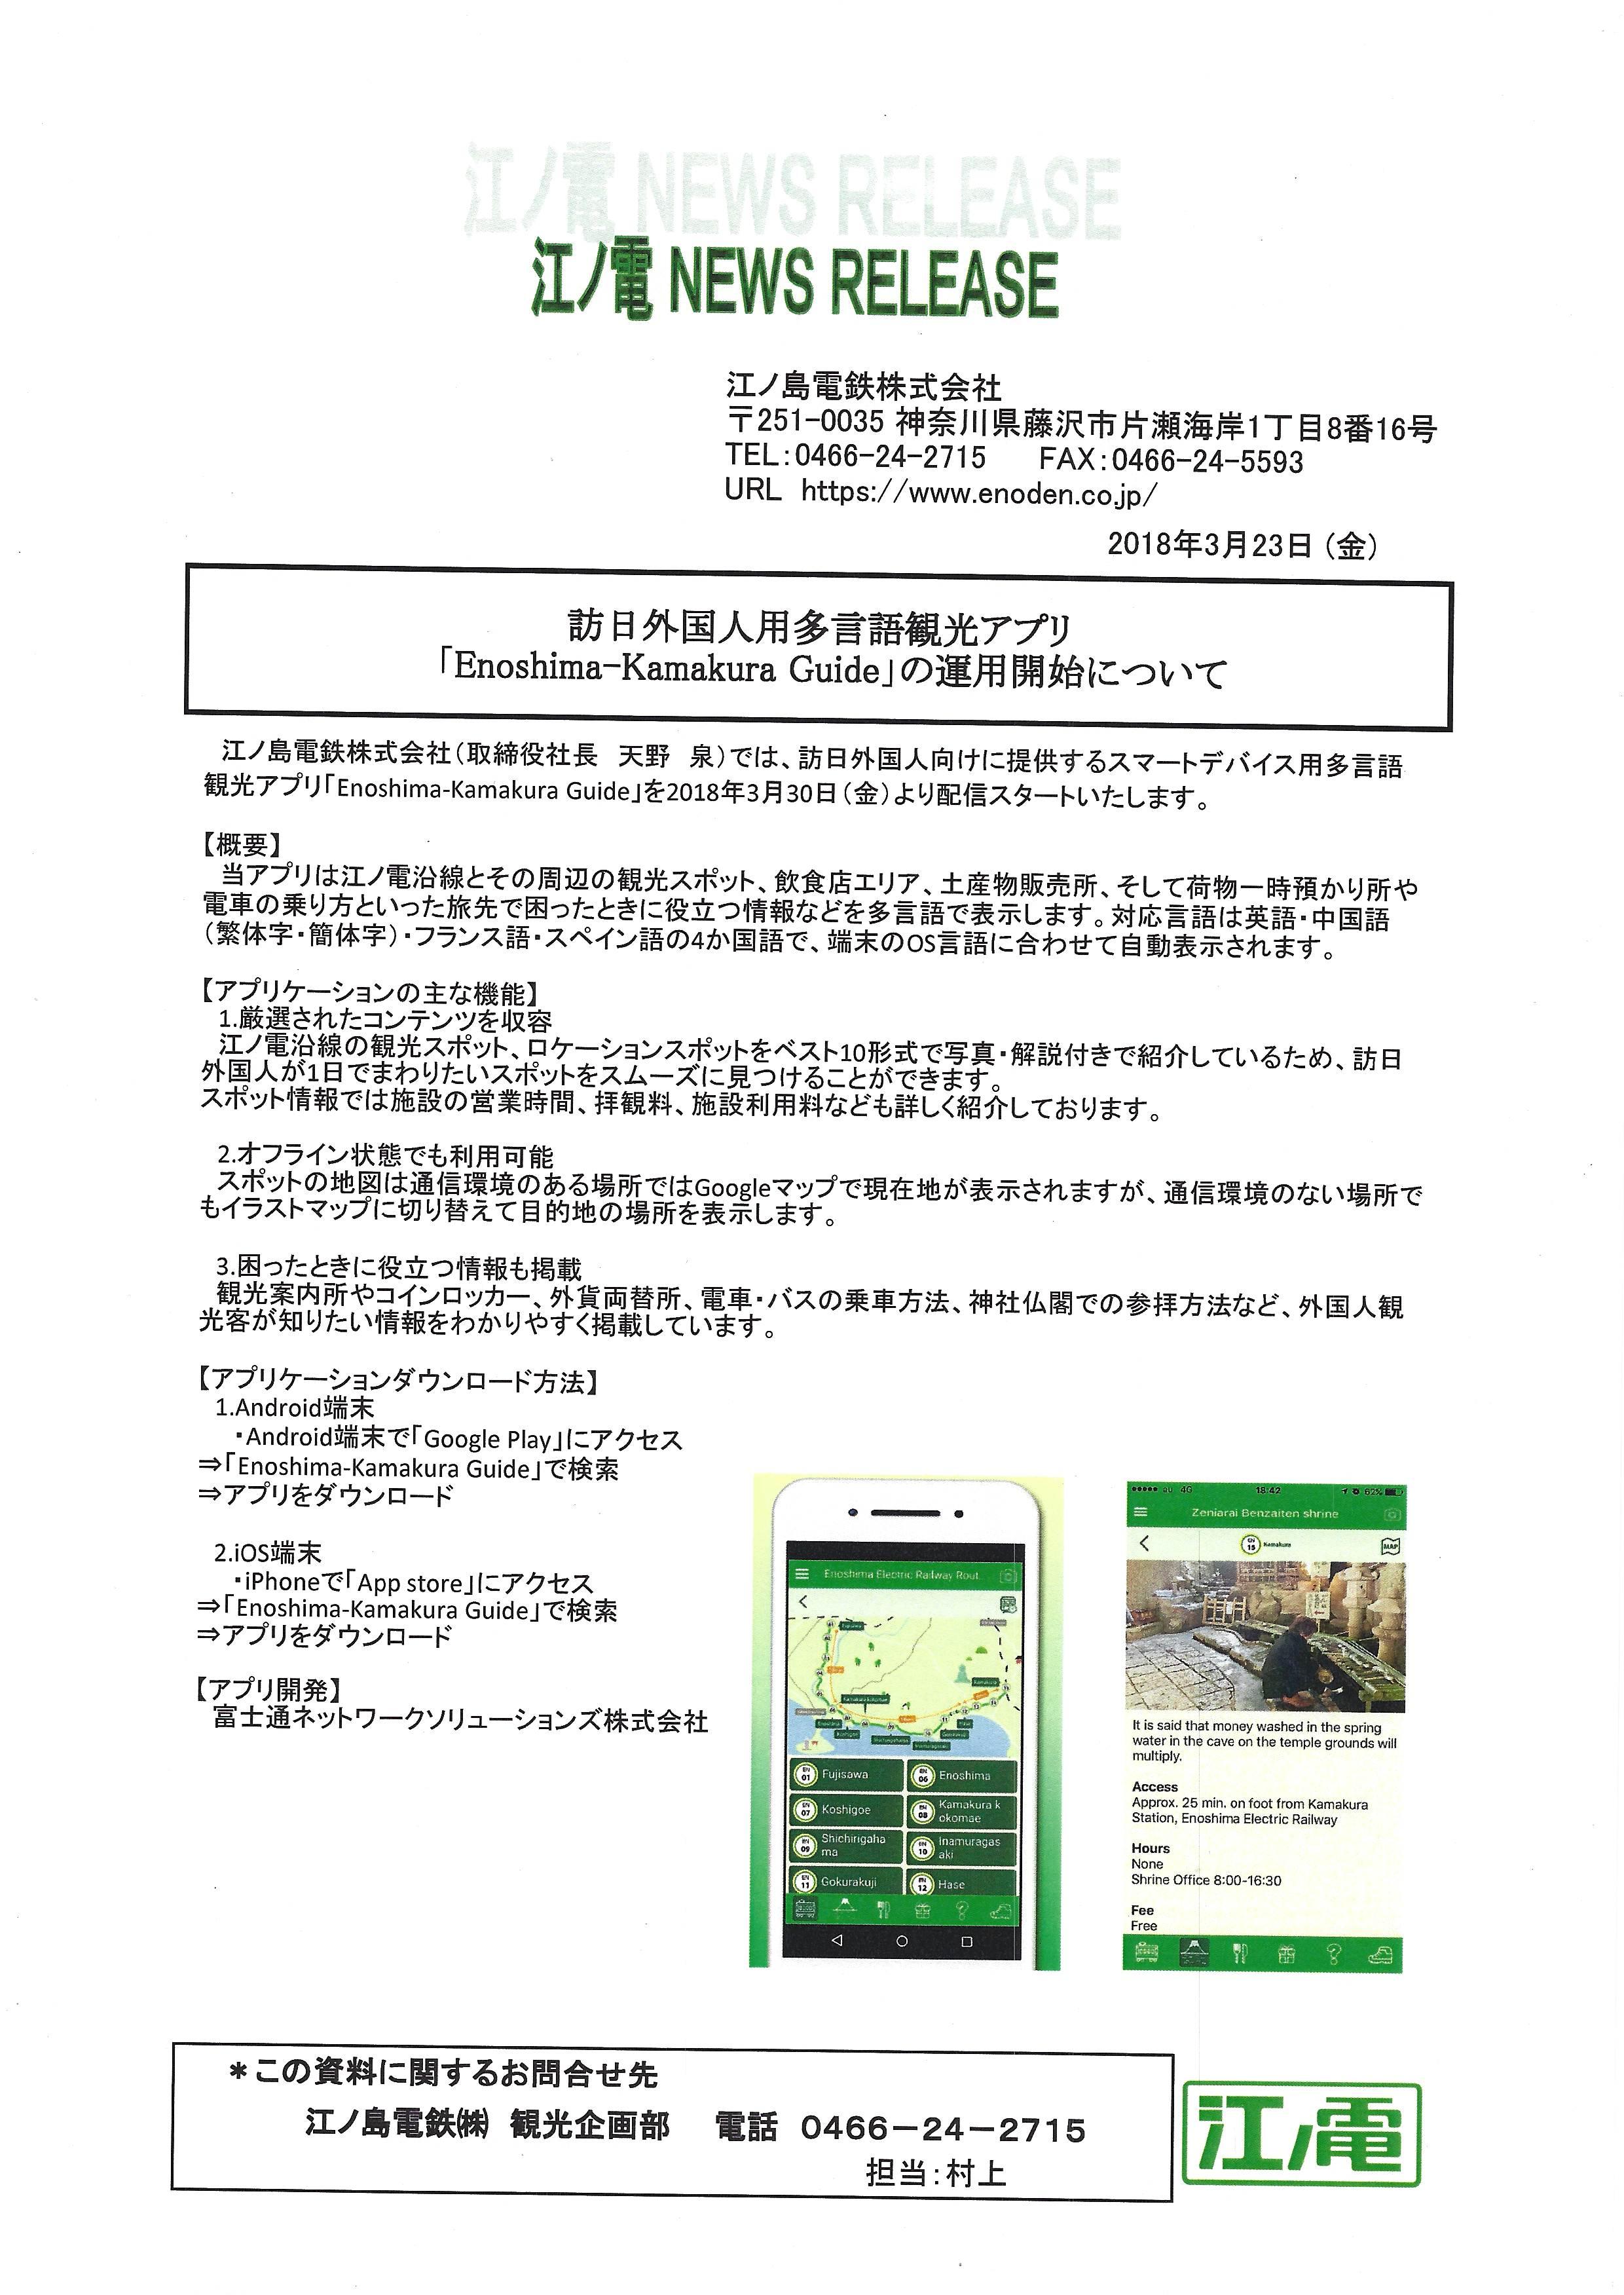 江ノ島電鉄が訪日外国人用多言語観光アプリの運用を開始 Taipei Representative Office In Yokohama 臺北駐日經濟文化代表處橫濱分處